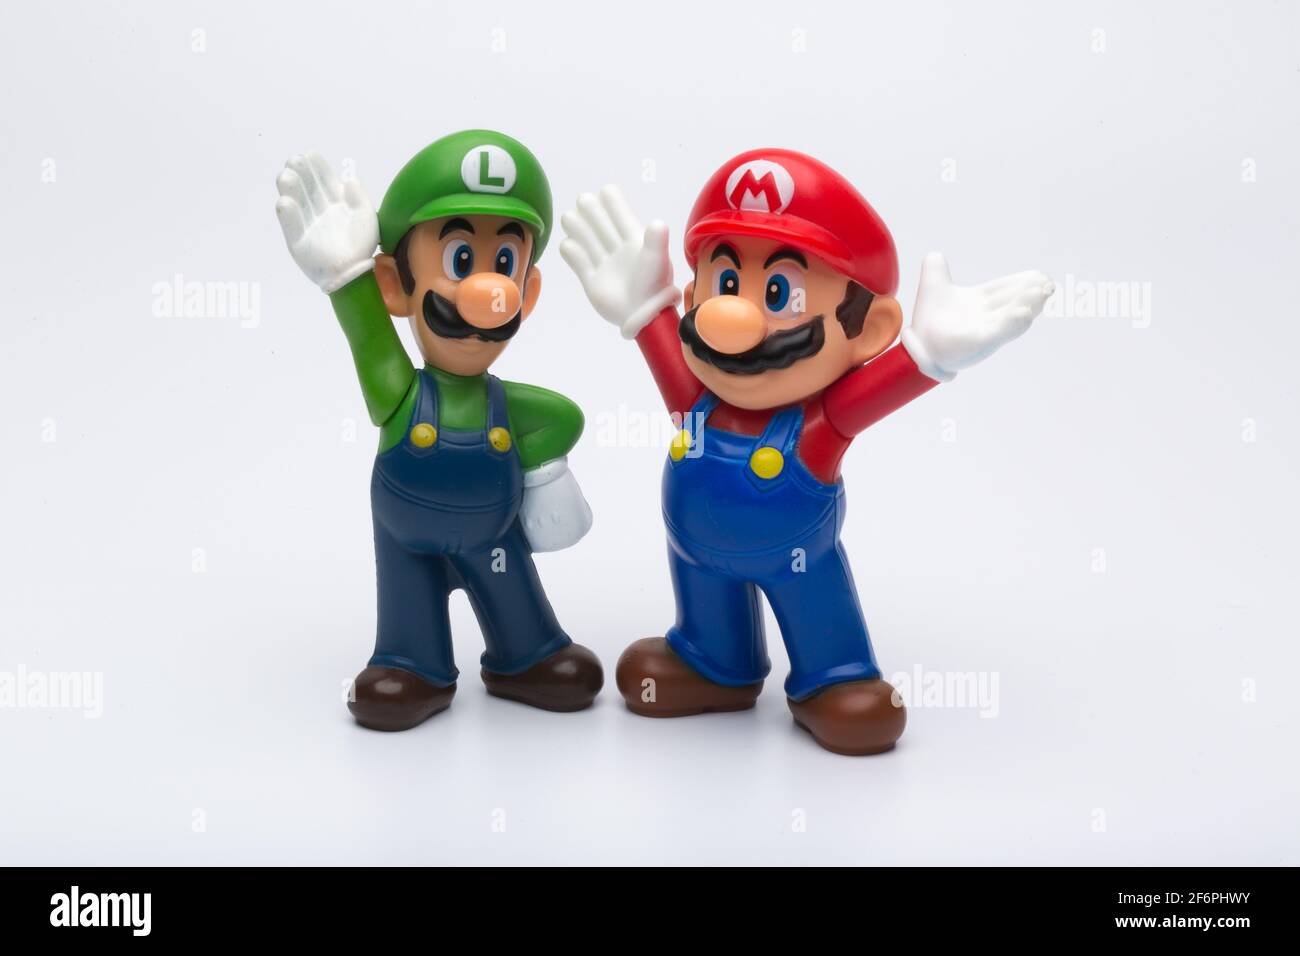 Tela do jogo Mario Bros Stock Photo - Alamy